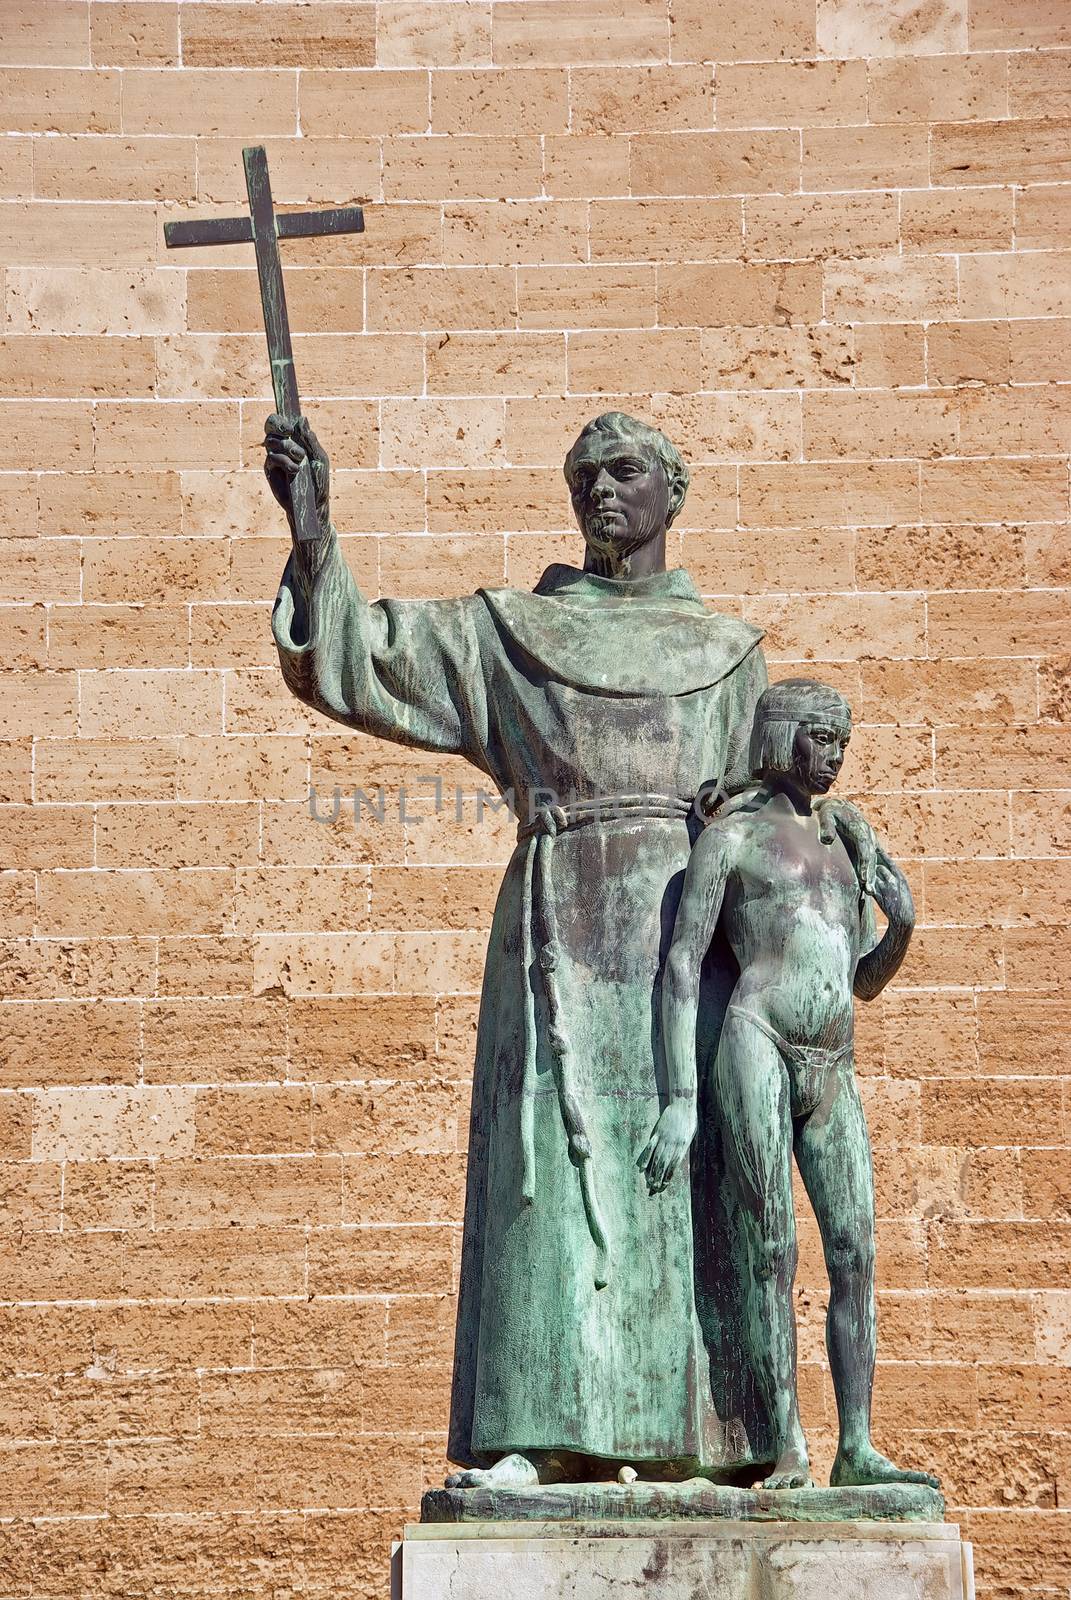 Statue of the missionary Junipero Serra (California missionary) in Majorca